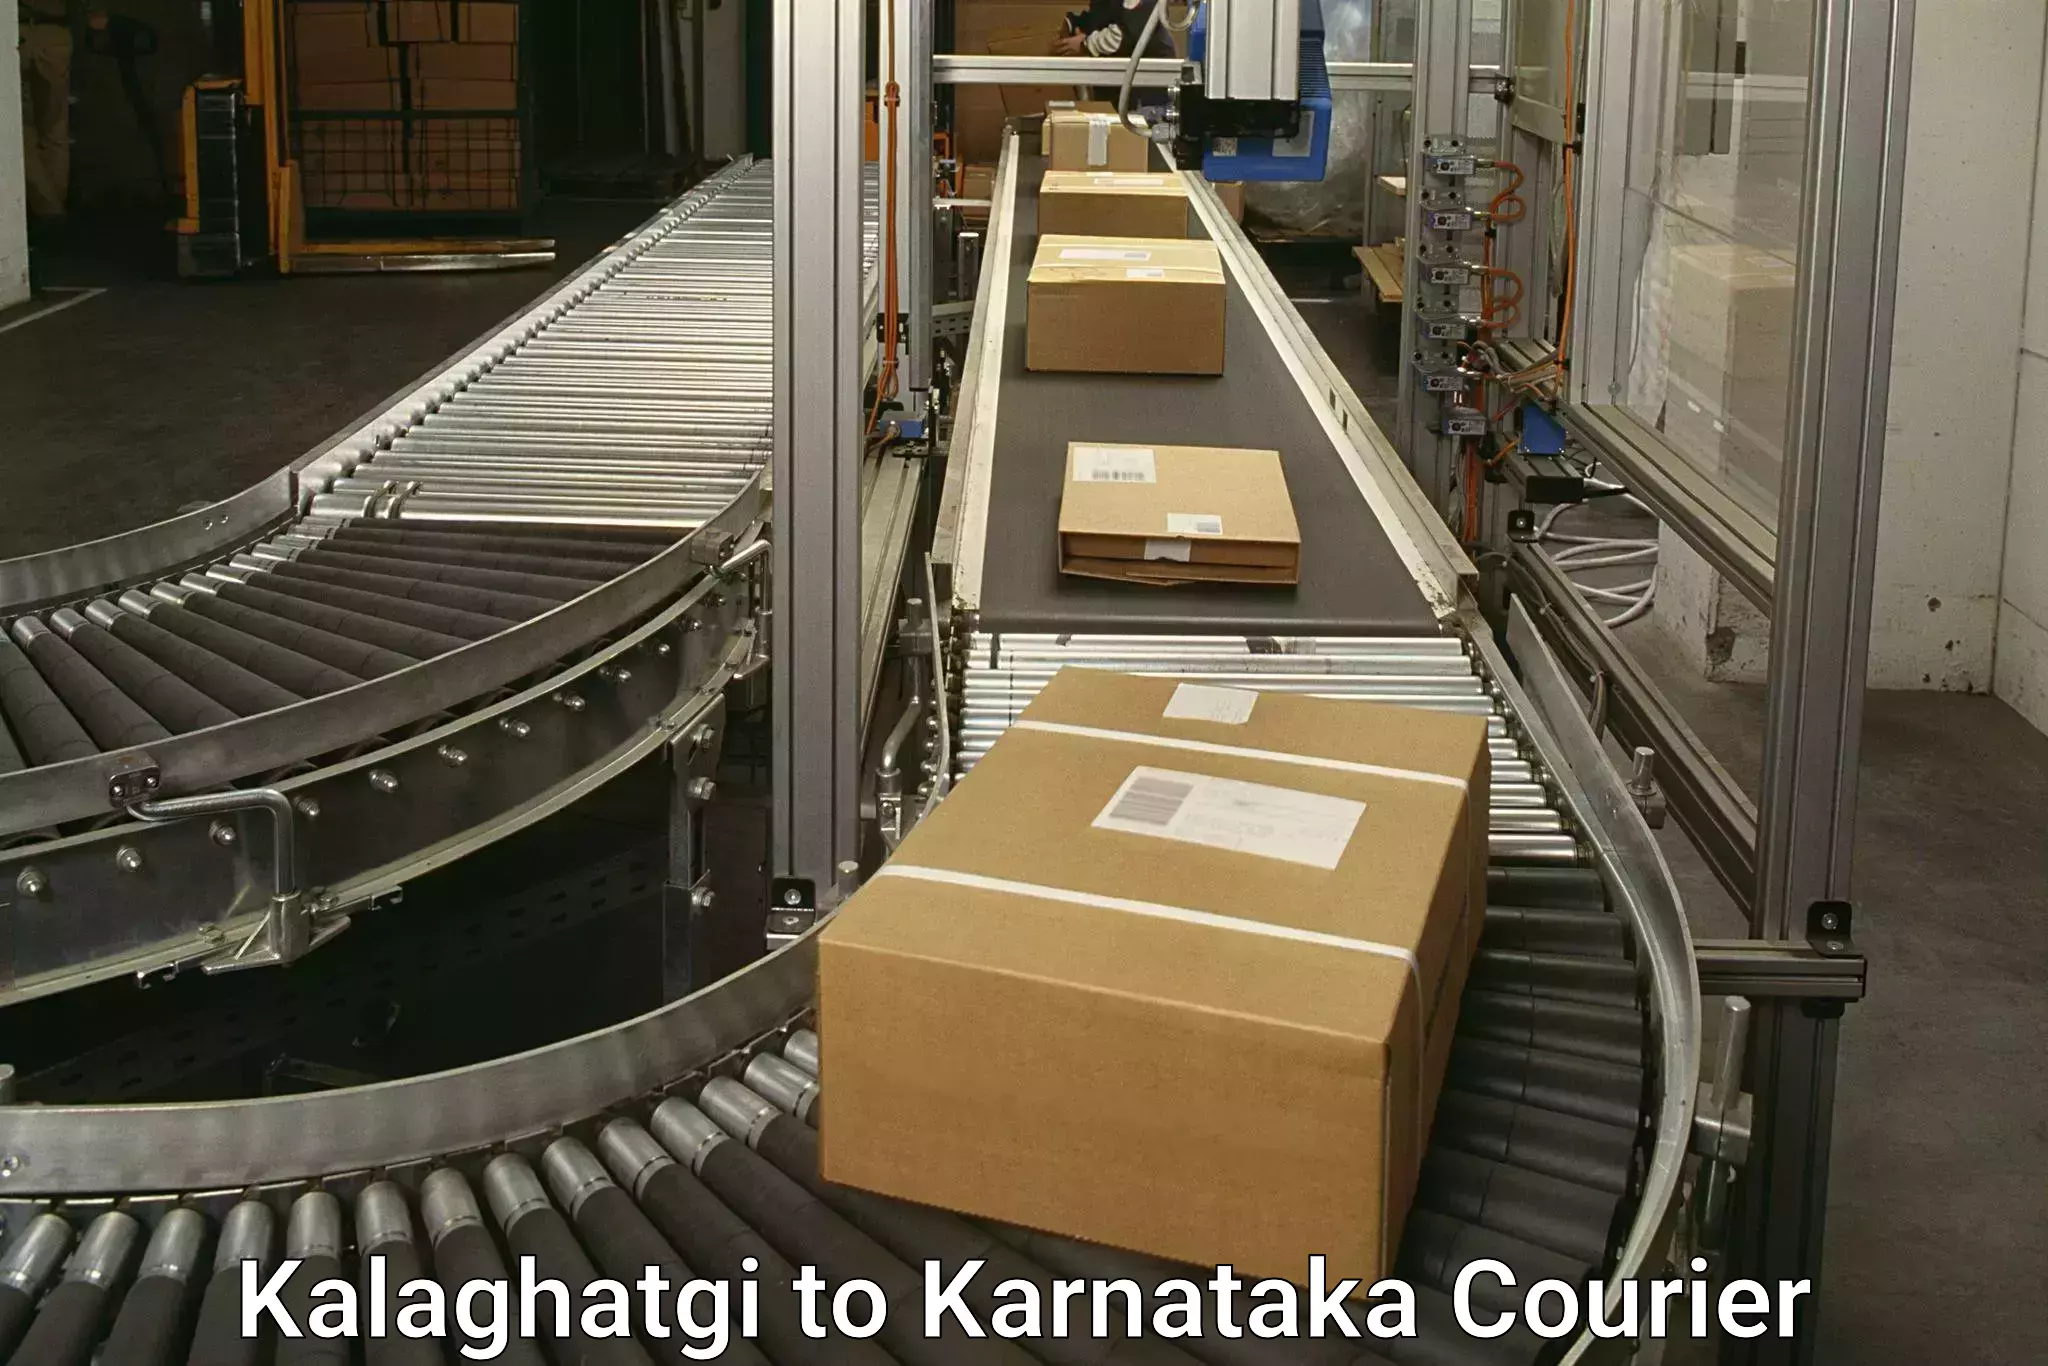 Courier service efficiency Kalaghatgi to Karnataka